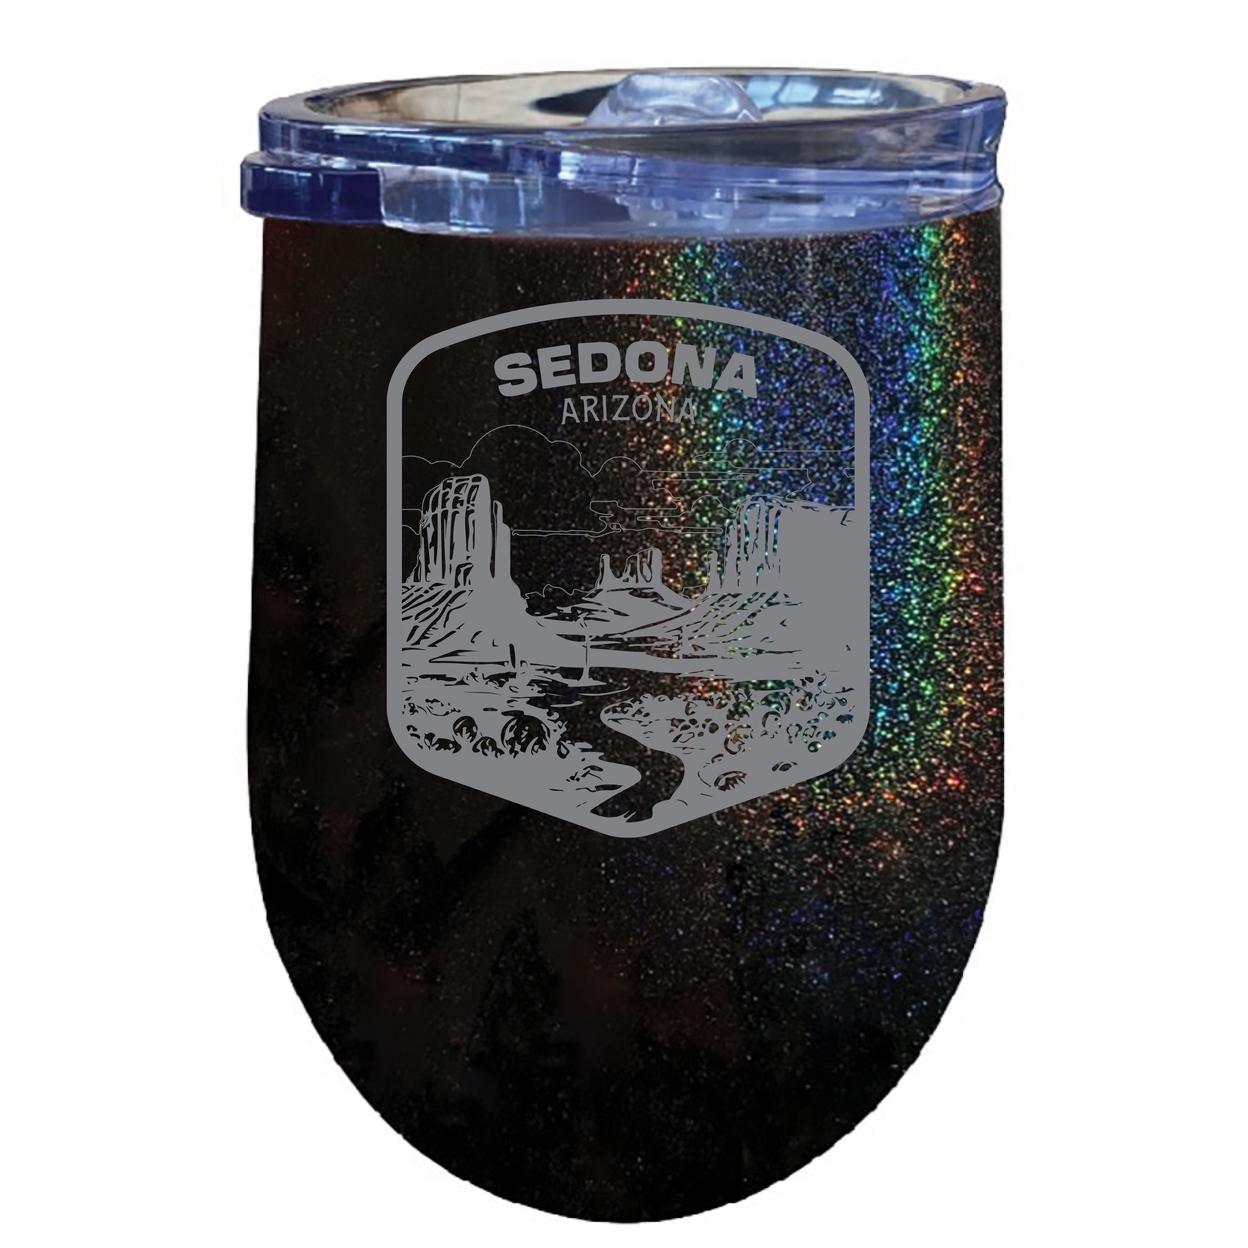 Sedona Arizona Souvenir 12 Oz Engraved Insulated Wine Stainless Steel Tumbler - Rainbow Glitter Gray,,Single Unit